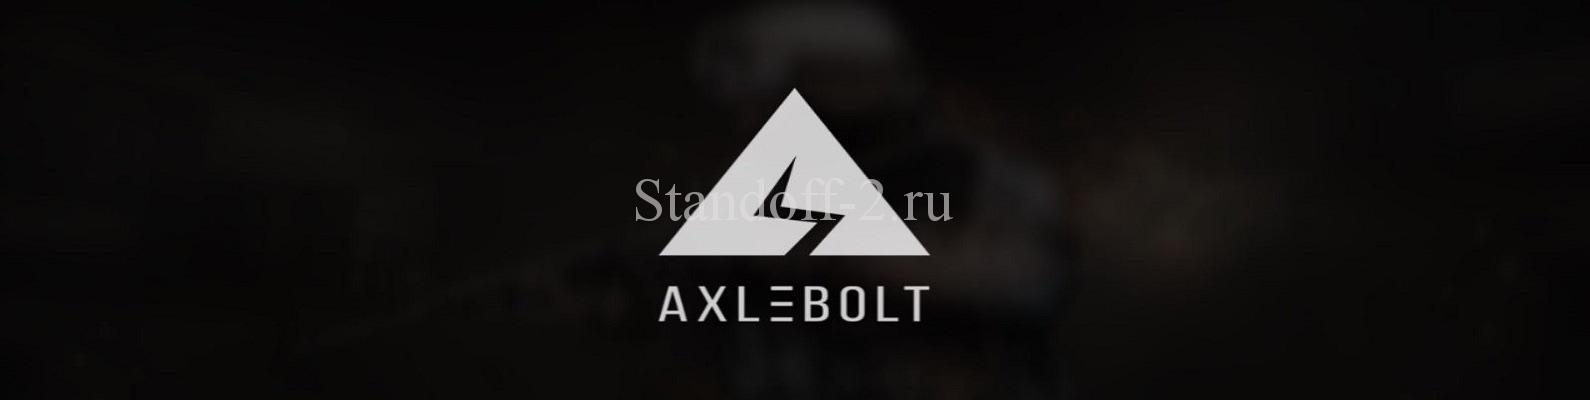 Axlebolt разработчики игра Standoff 2